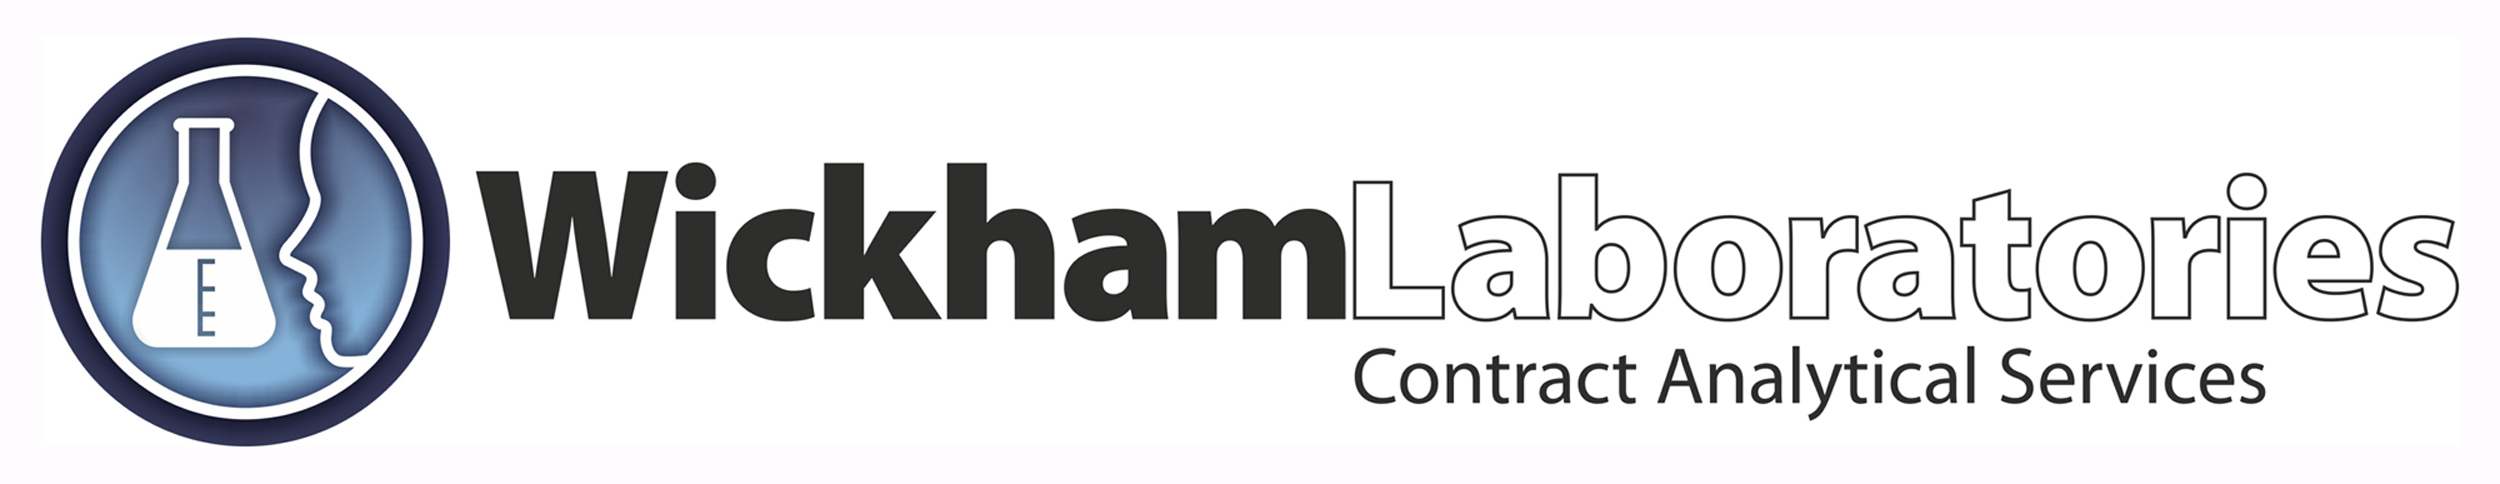 Wickham_Logo1.jpg